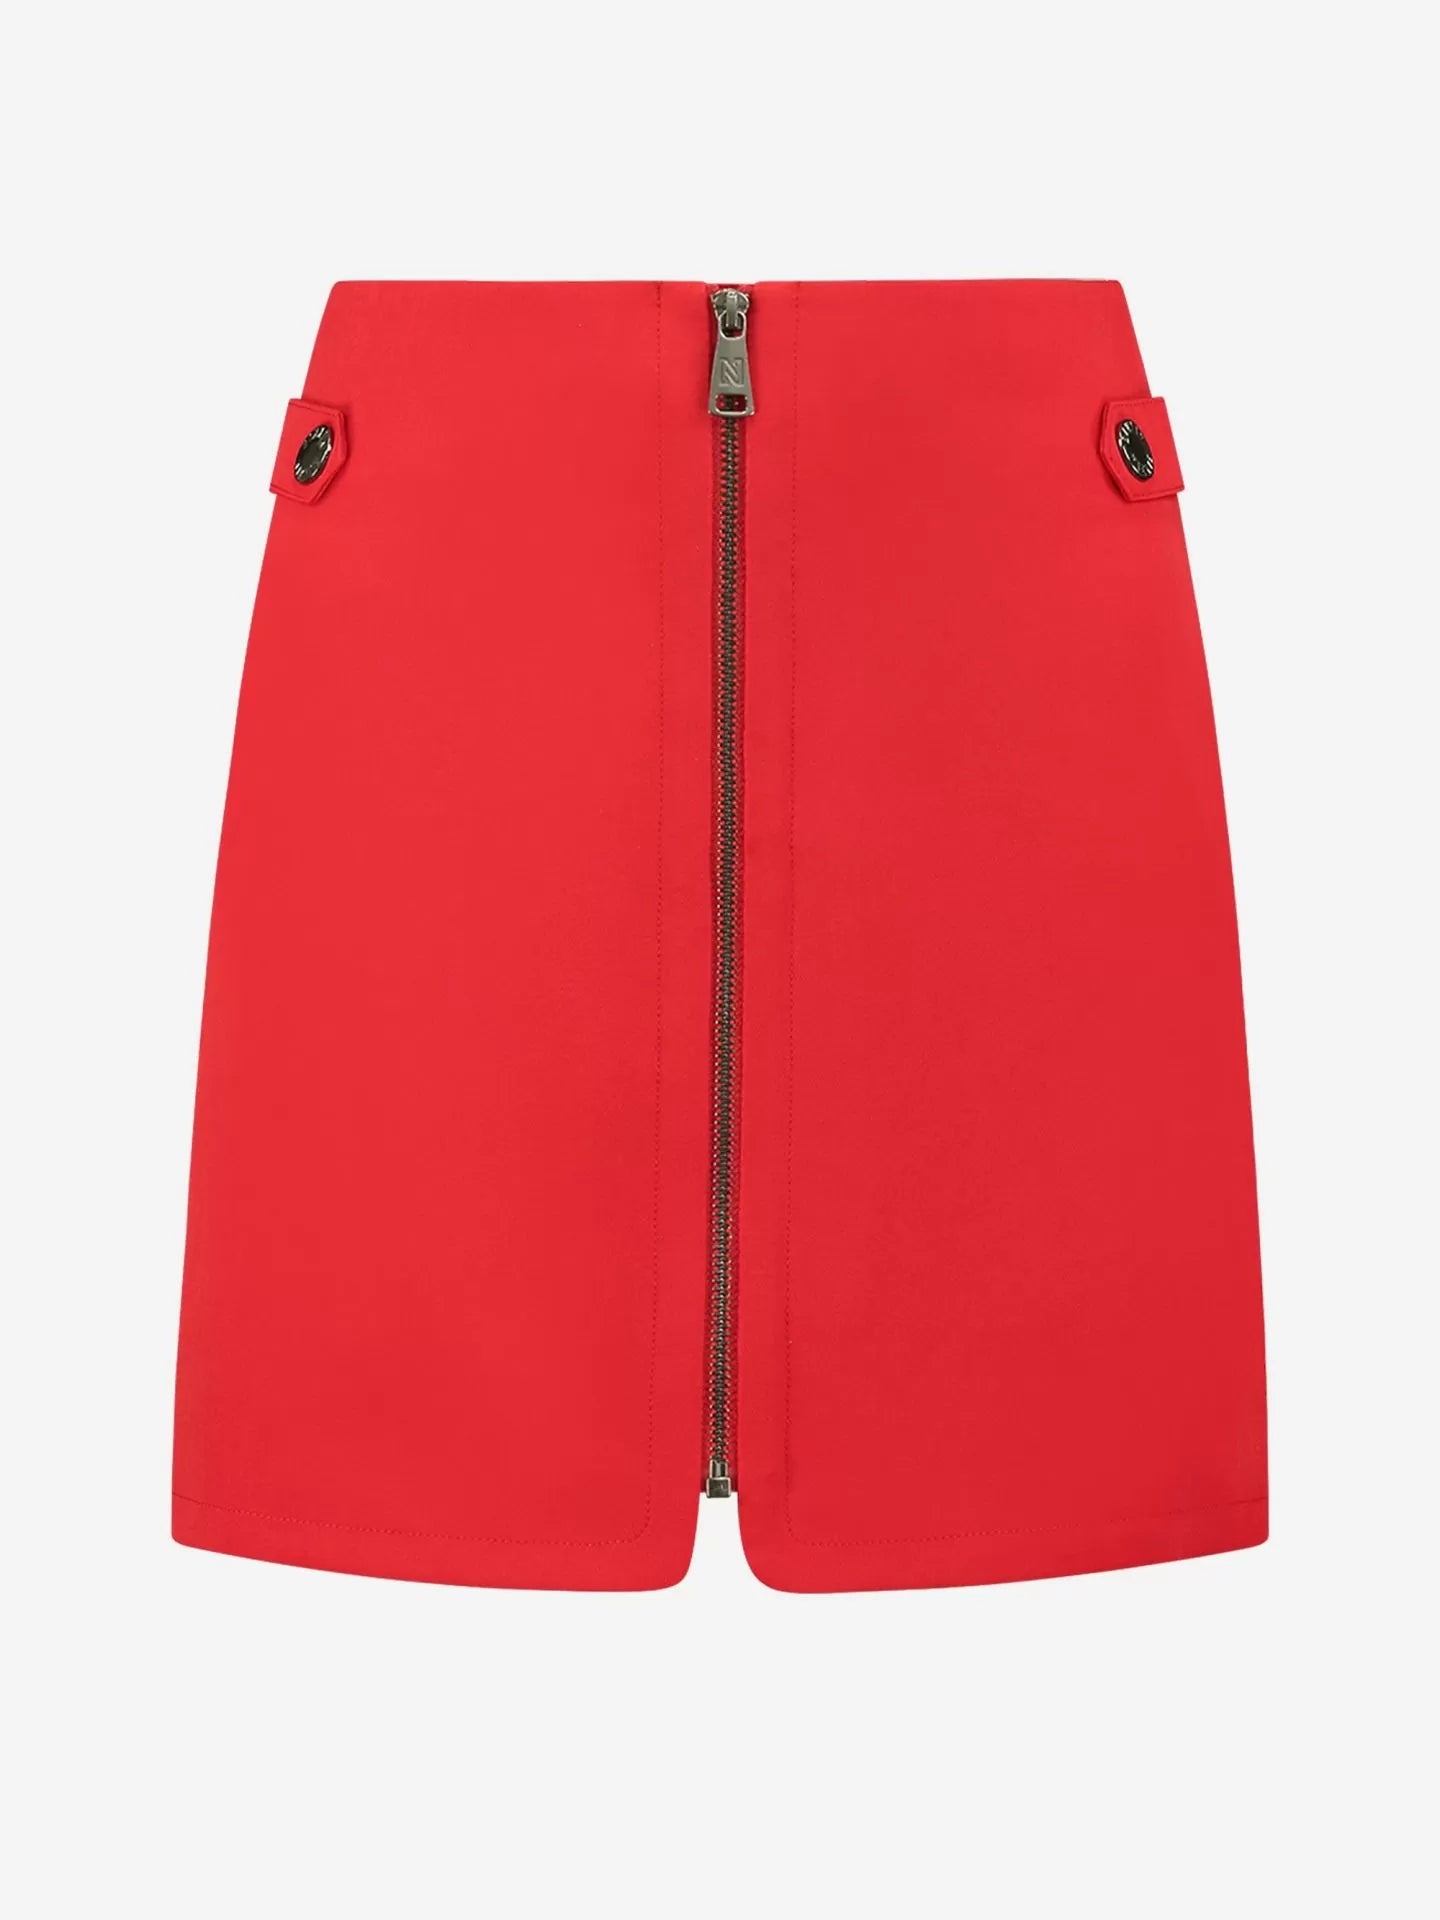 Nikkie Kate Moss Africa Skirt - Red